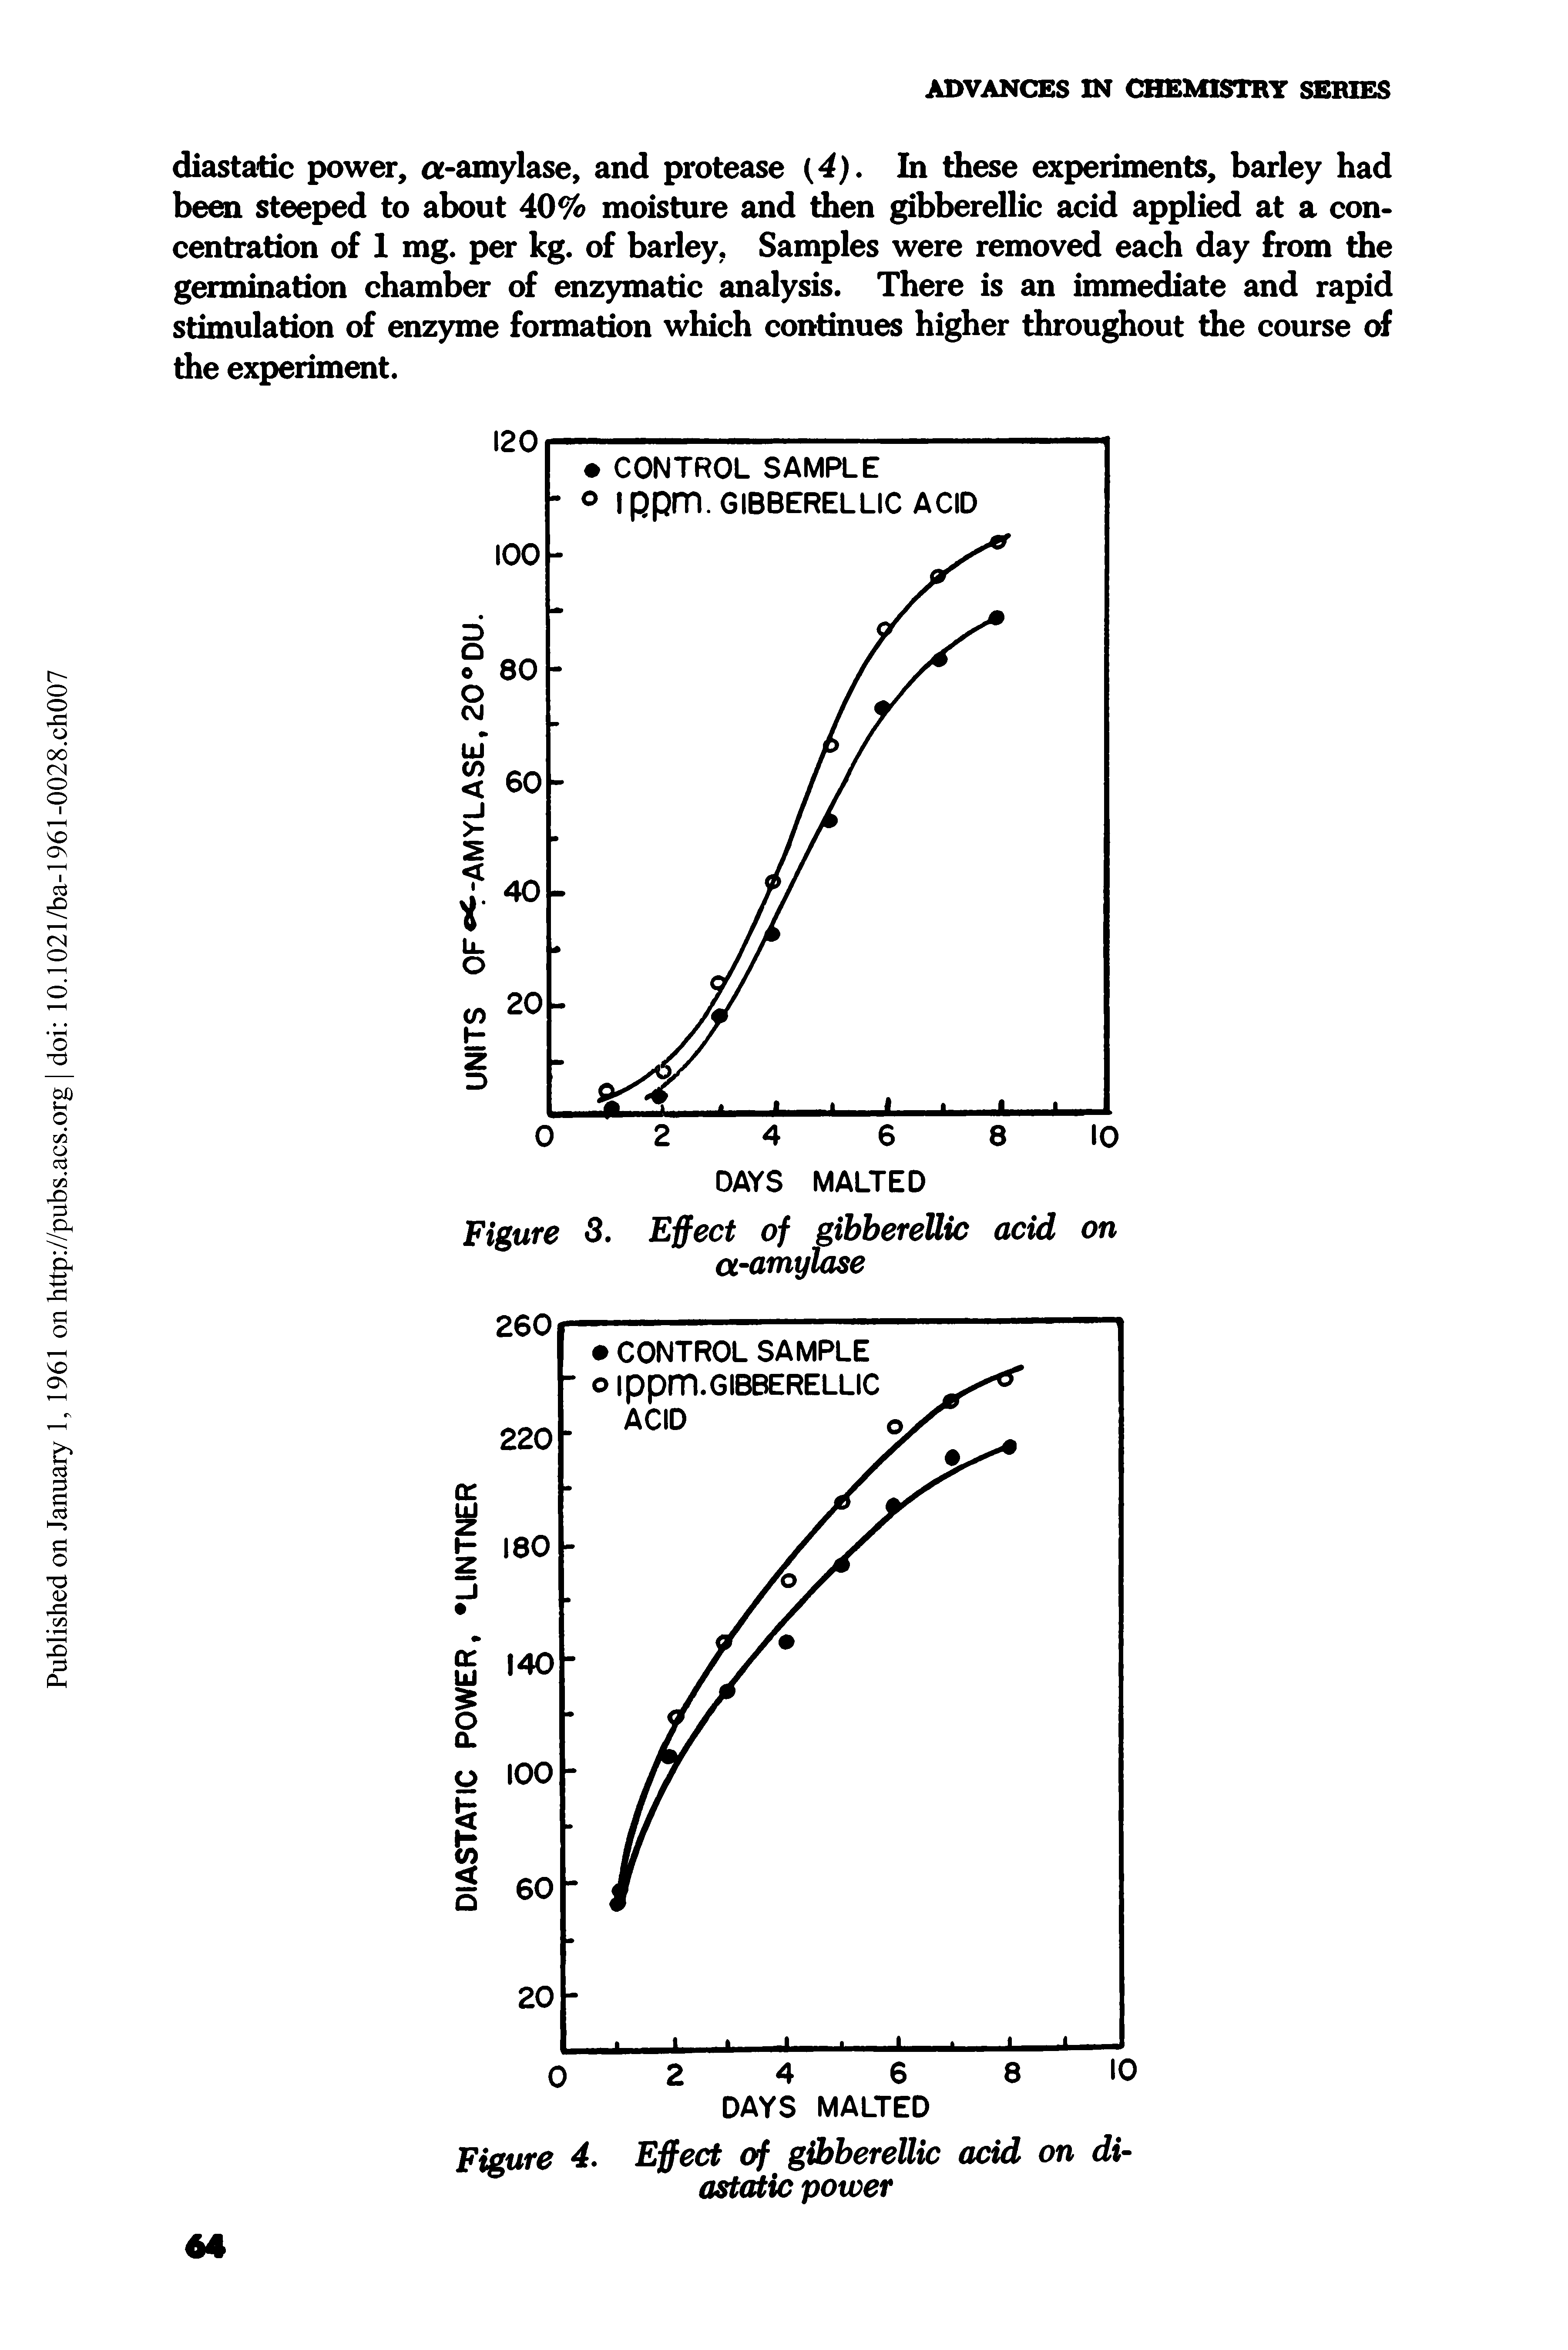 Figure 4. Effect of gibberellic acid on diastatic power...